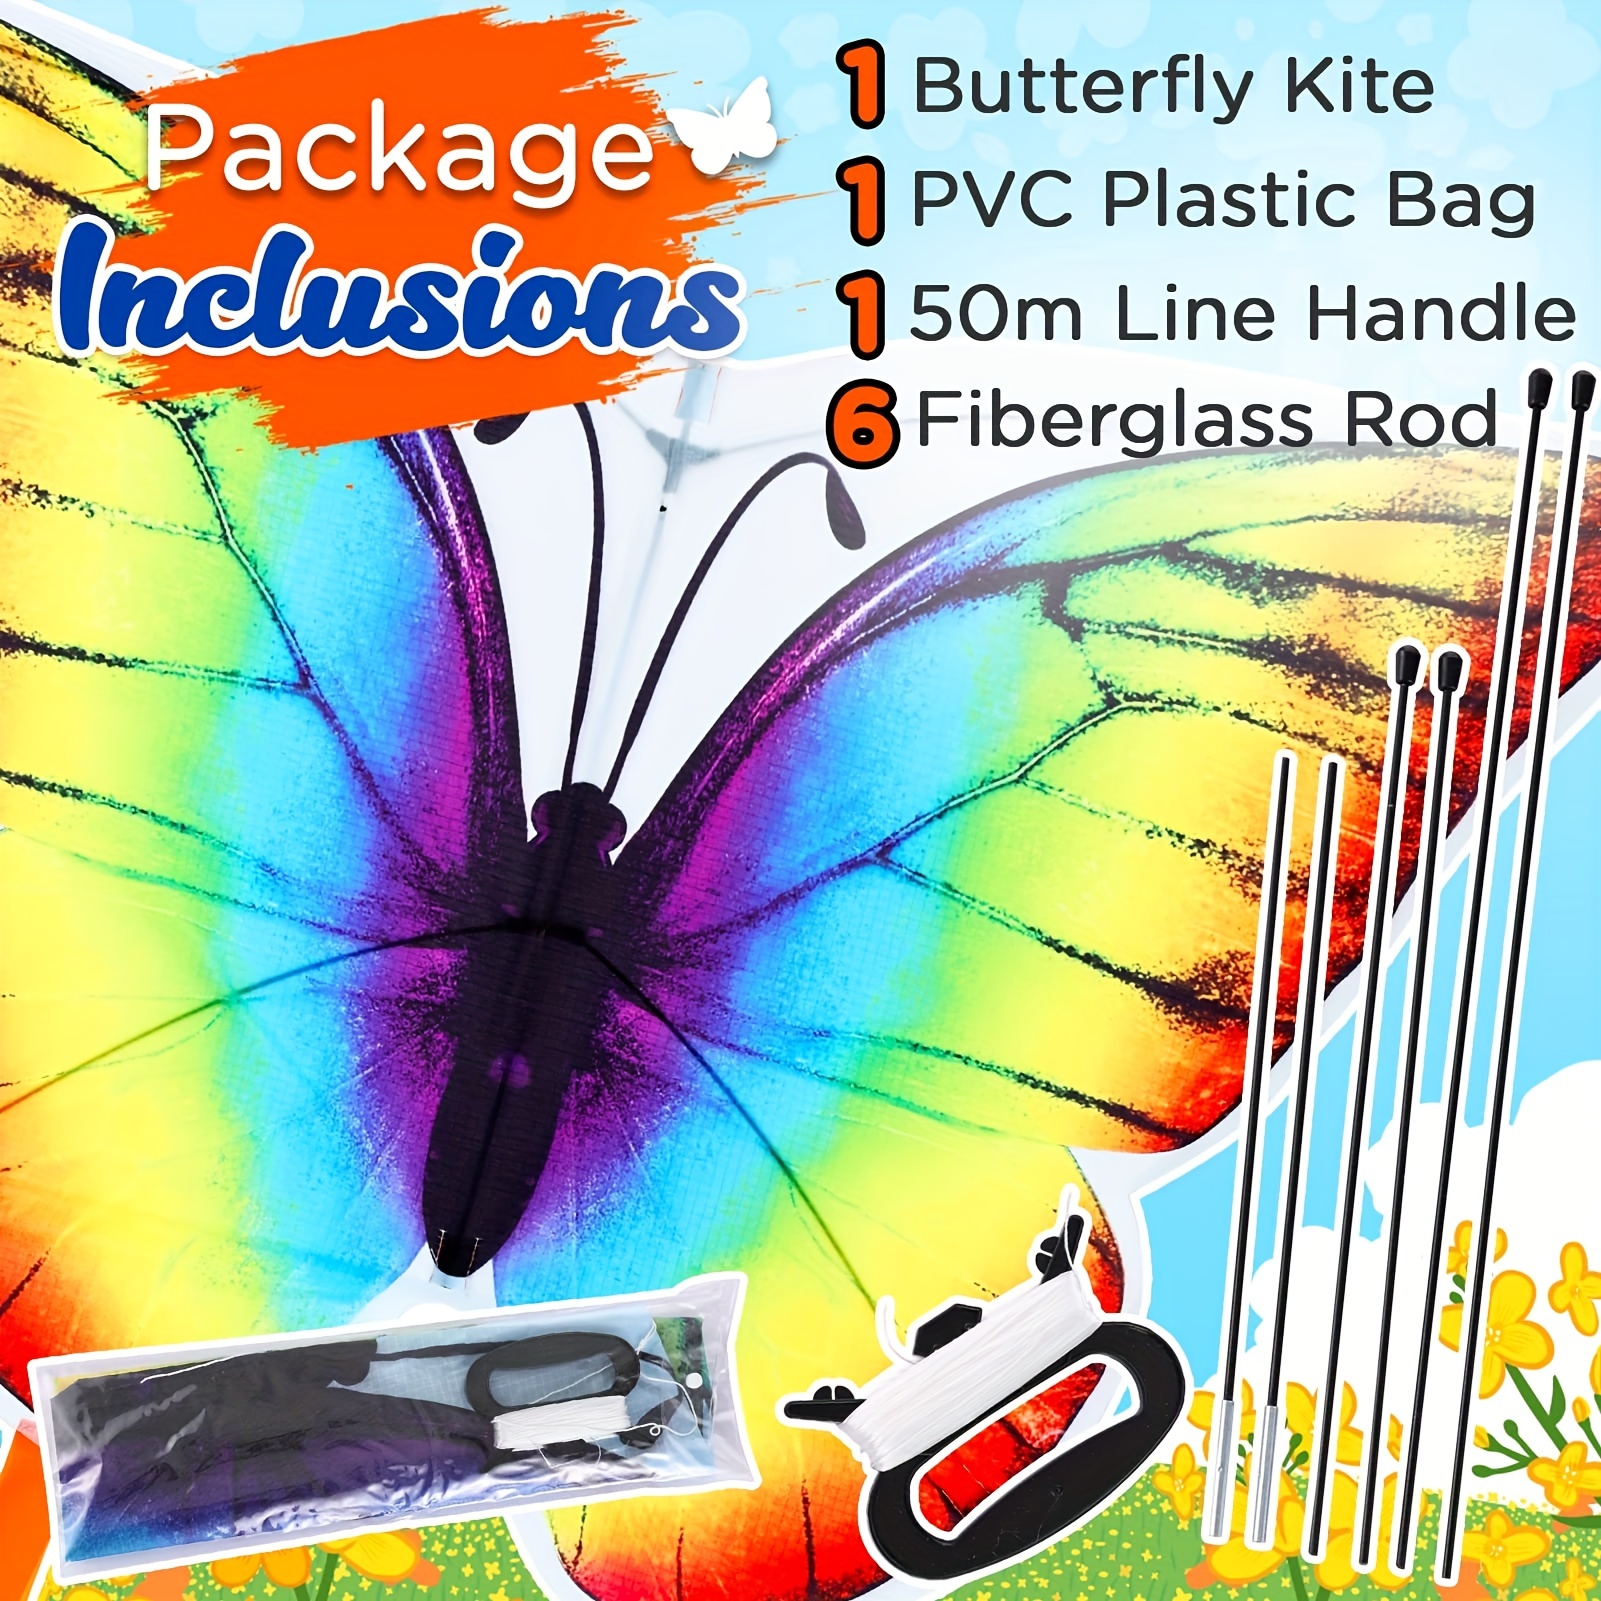 Fabric Kite Package, Nylon Kite Package